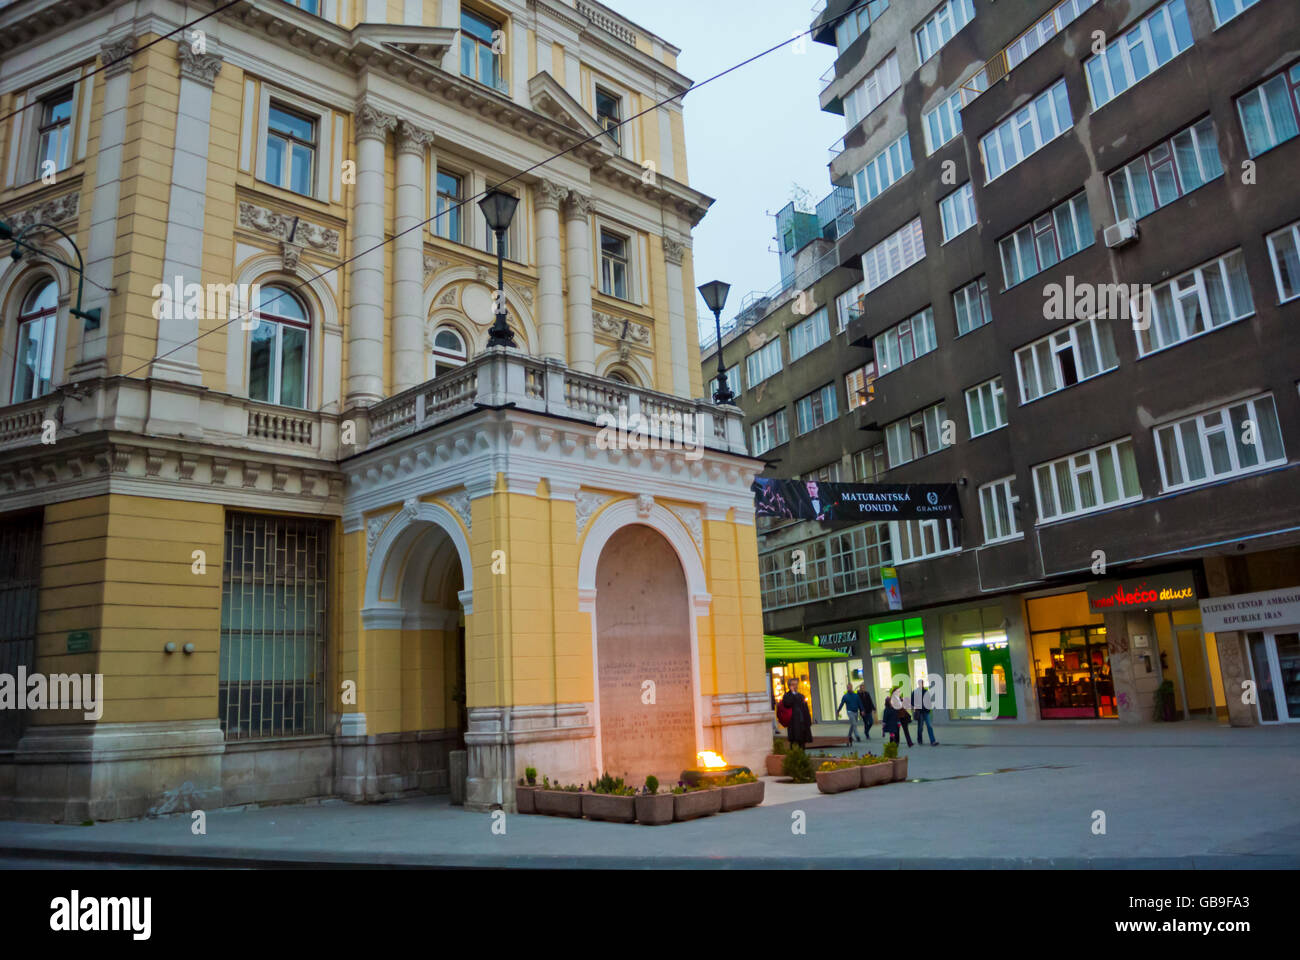 Vjecna vatra, the Eternal Flame, Ferhadija street, old town, Sarajevo, Bosnia and Herzegovina, Europe Stock Photo